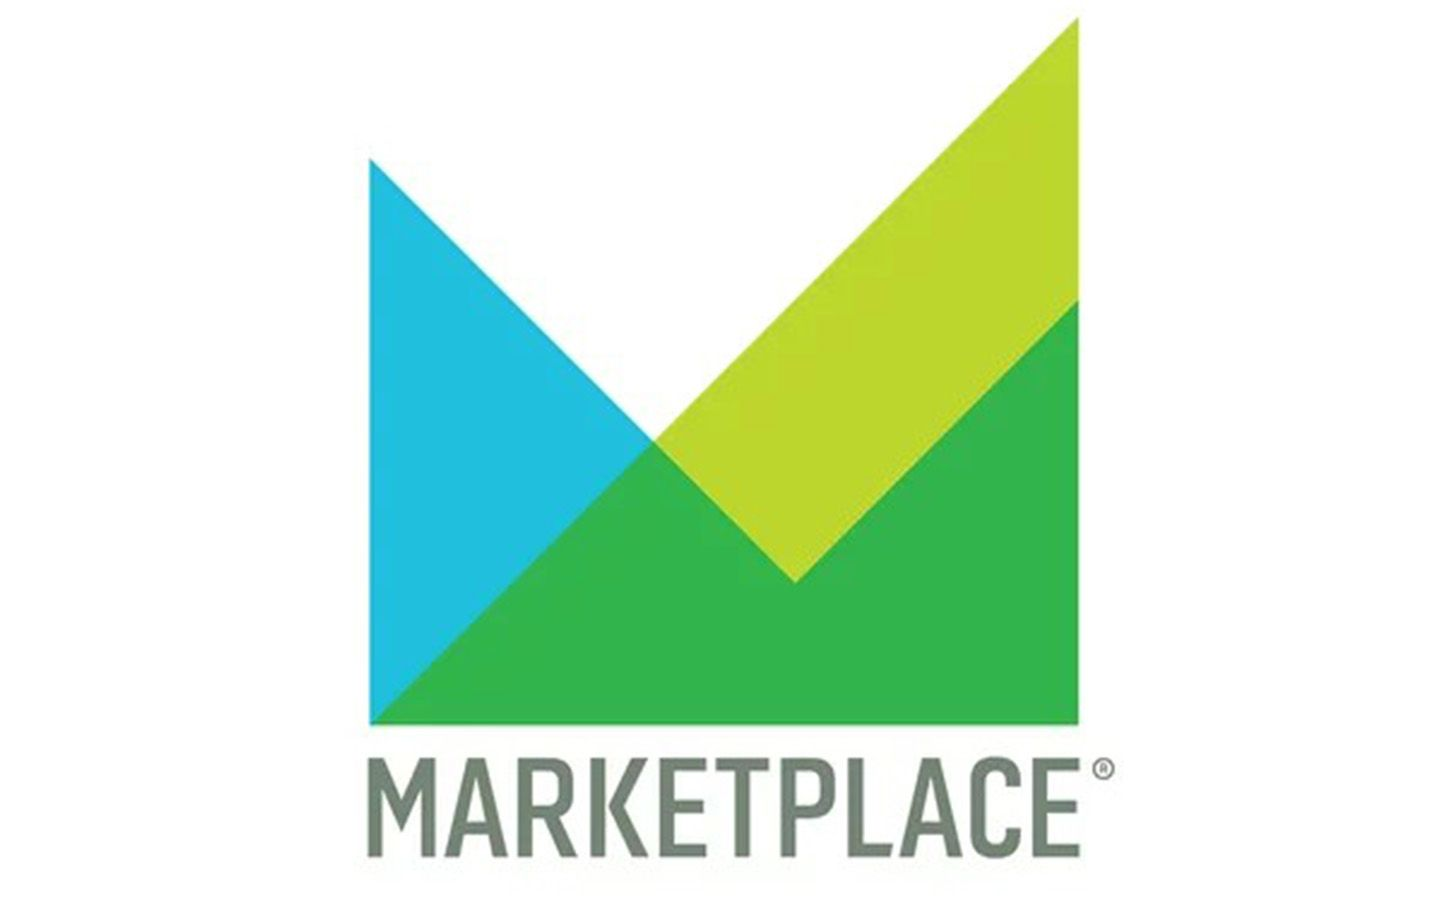 NPR Marketplace logo